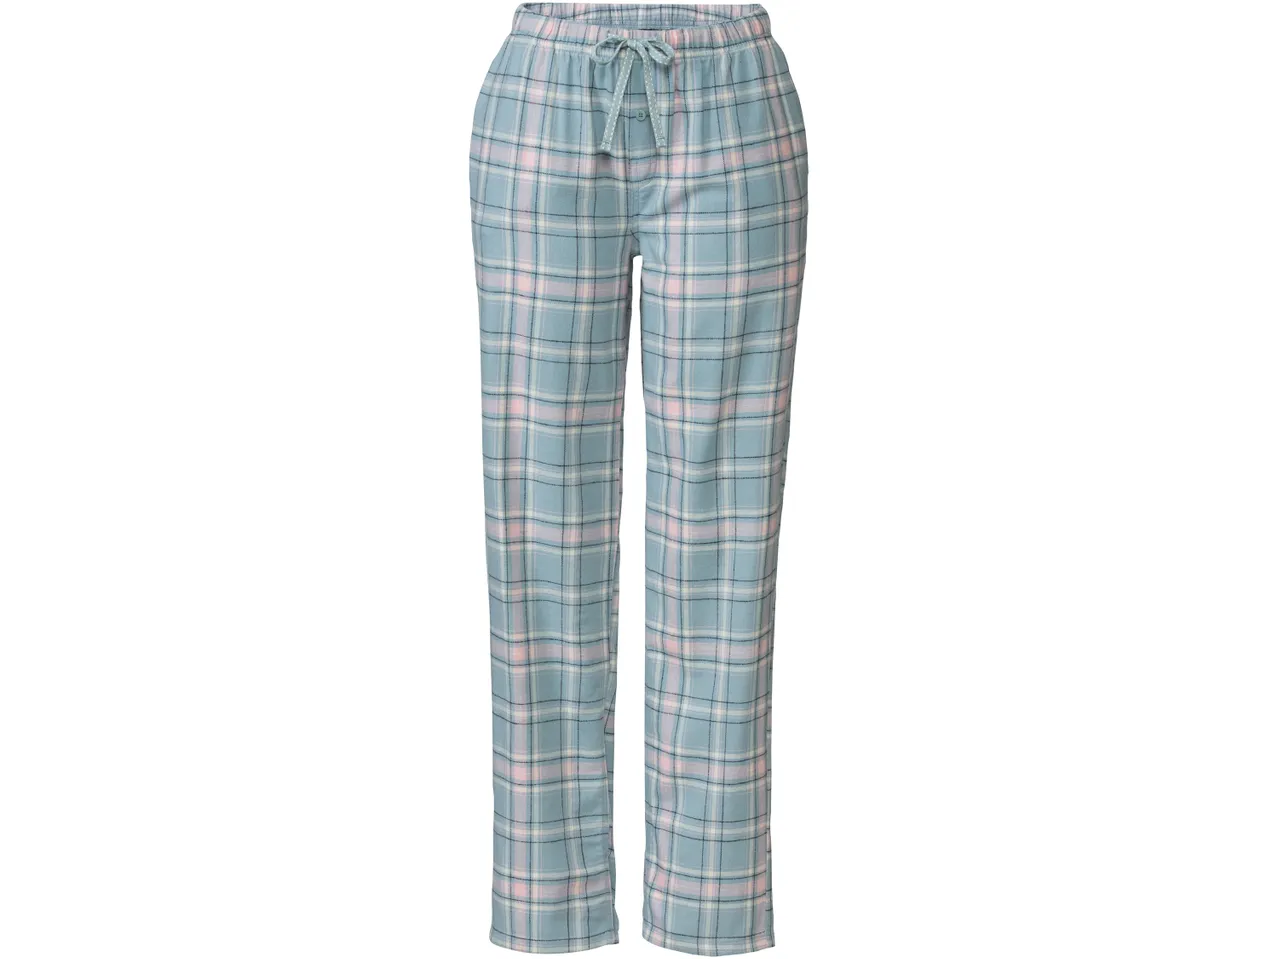 Pantaloni pigiama da donna , prezzo 6,99 EUR 
Pantaloni pigiama da donna Misure: ...